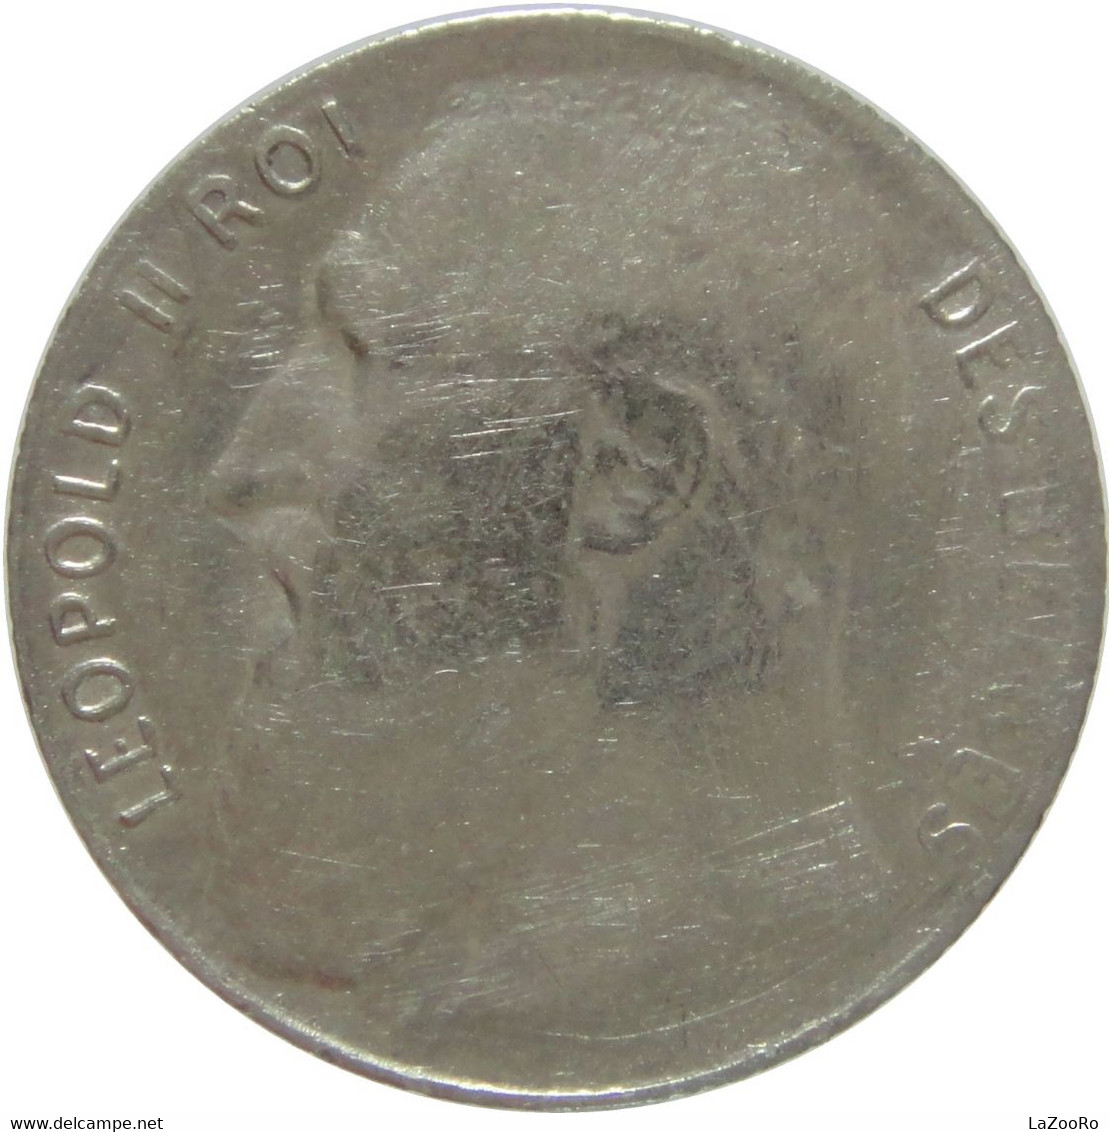 LaZooRo: Belgium 50 Centimes 1901 VF / XF - Silver - 50 Centimes